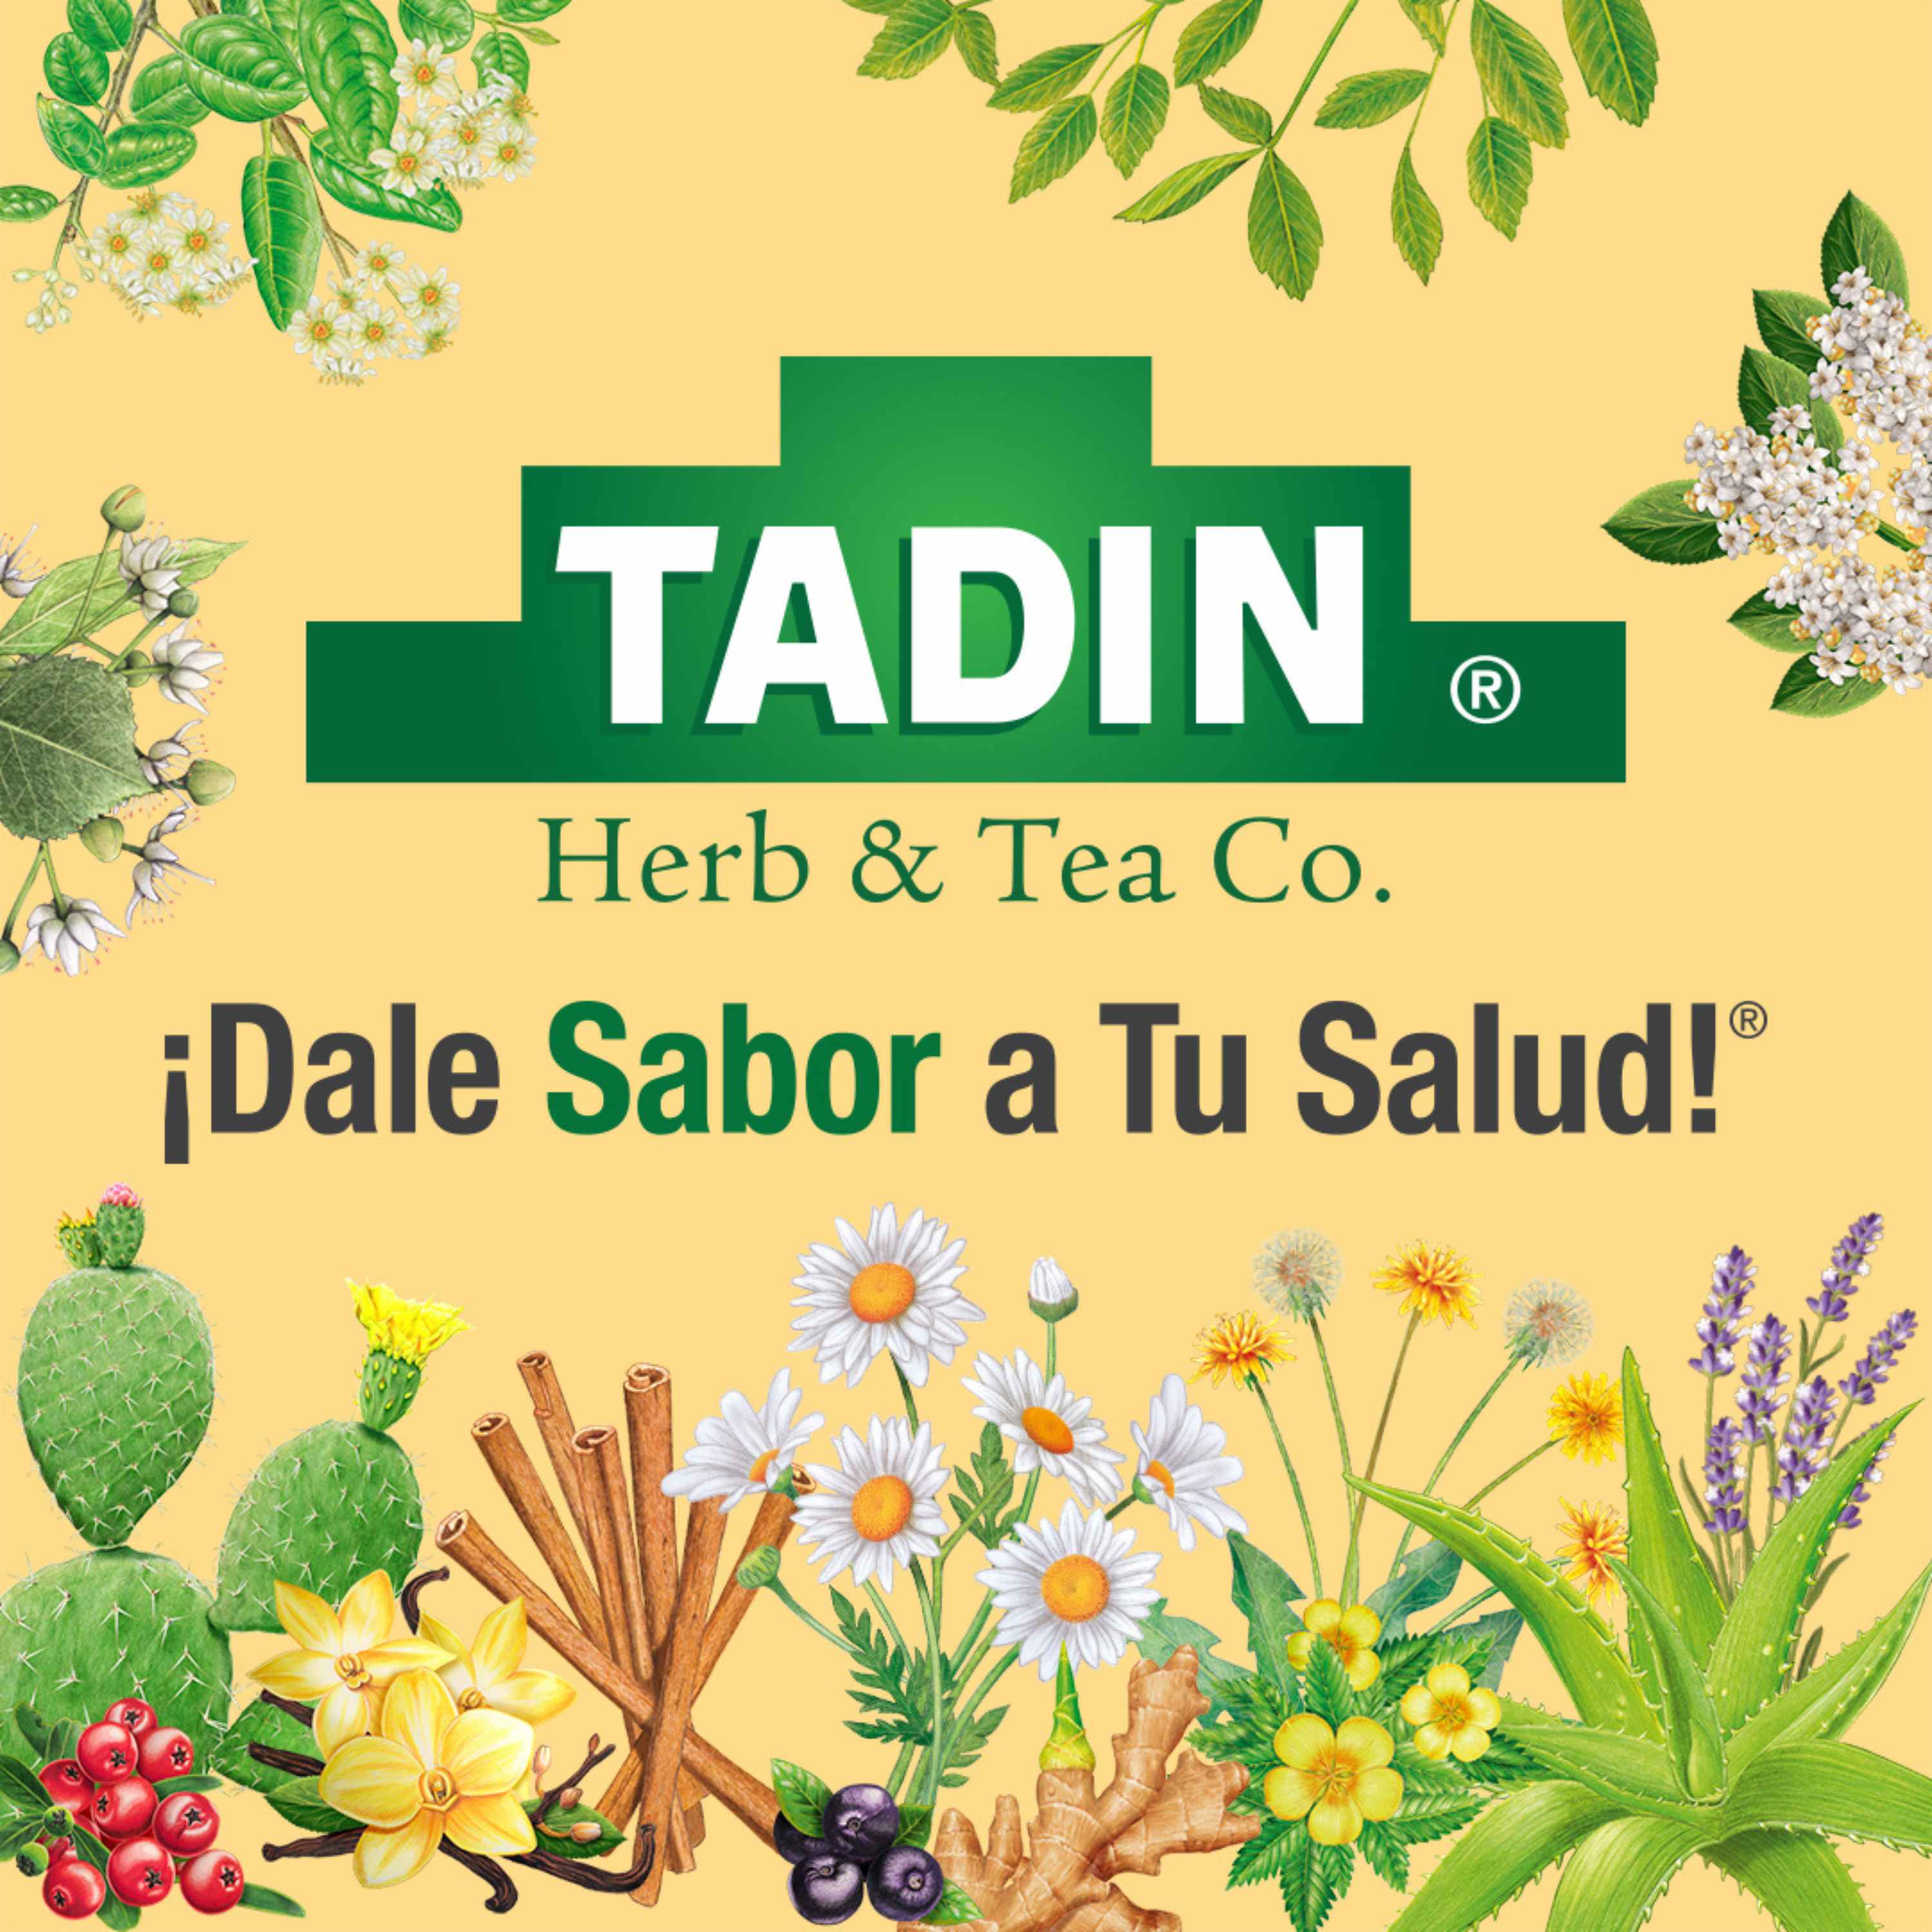 Artwork for Dale Sabor A Tu Salud by Tadin Herb & Tea Co.